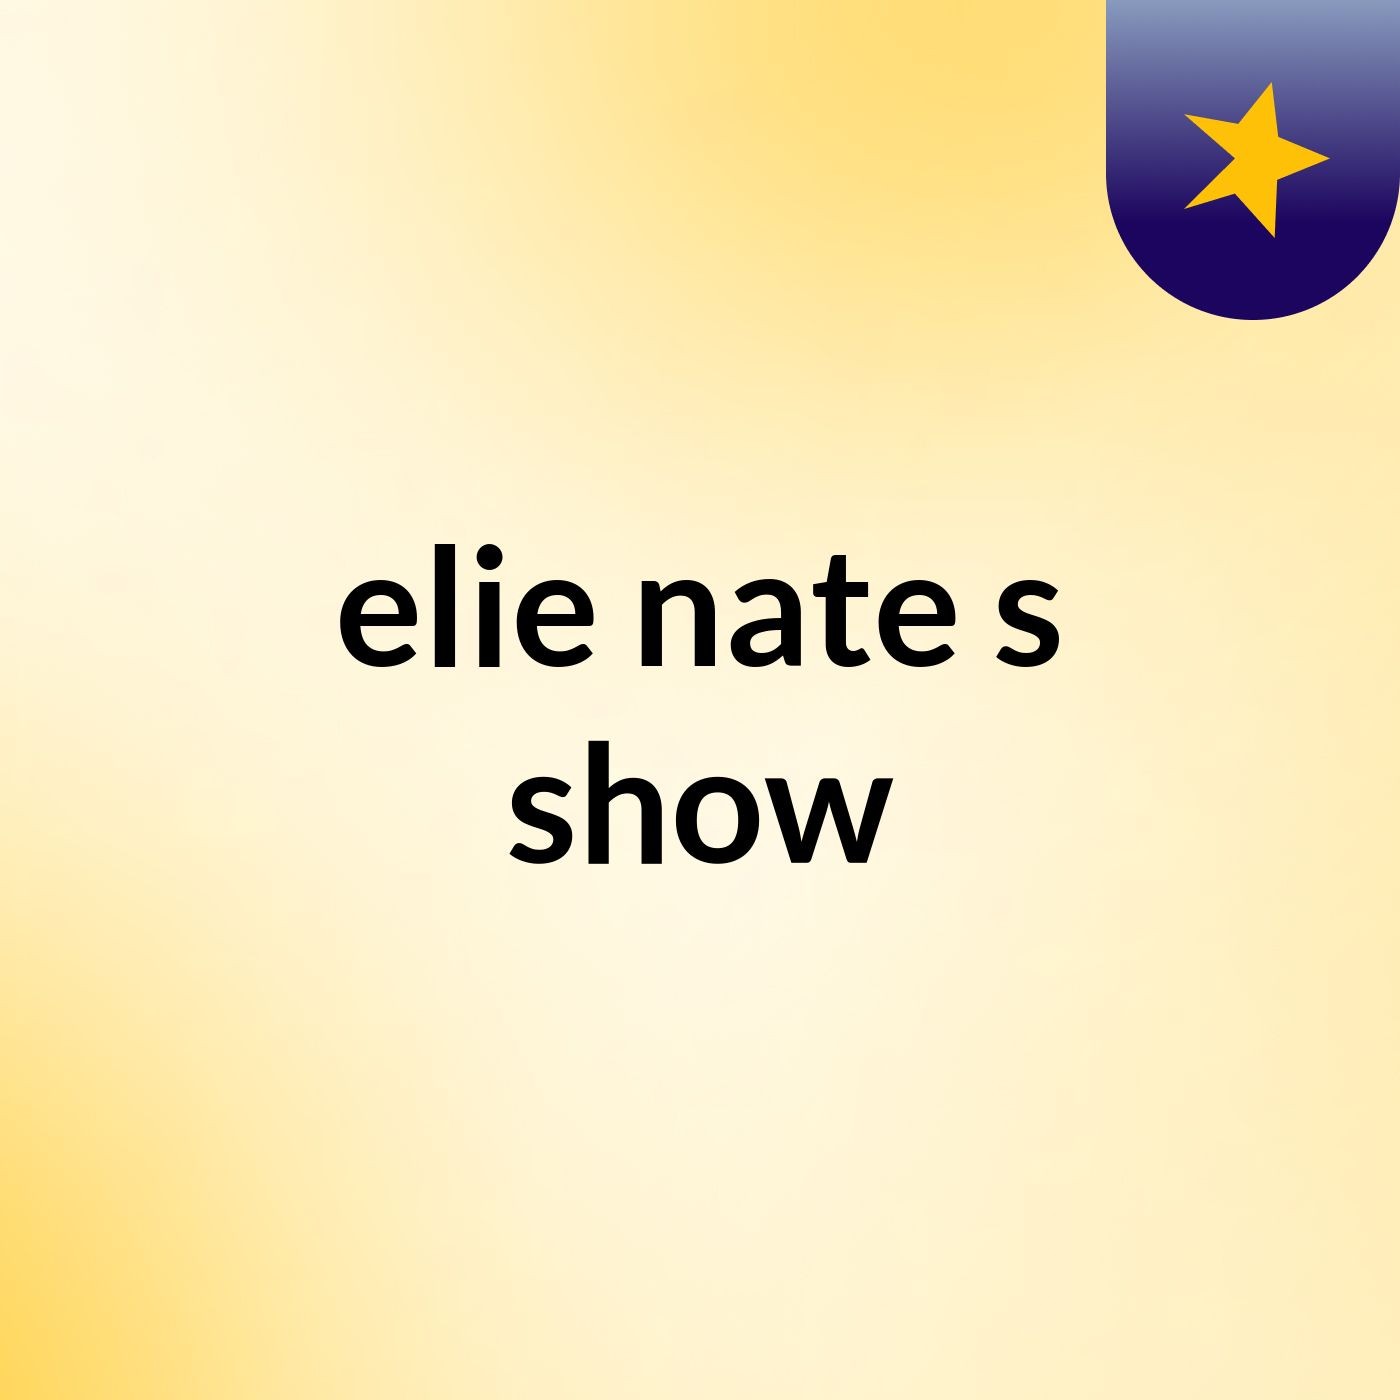 elie nate's show